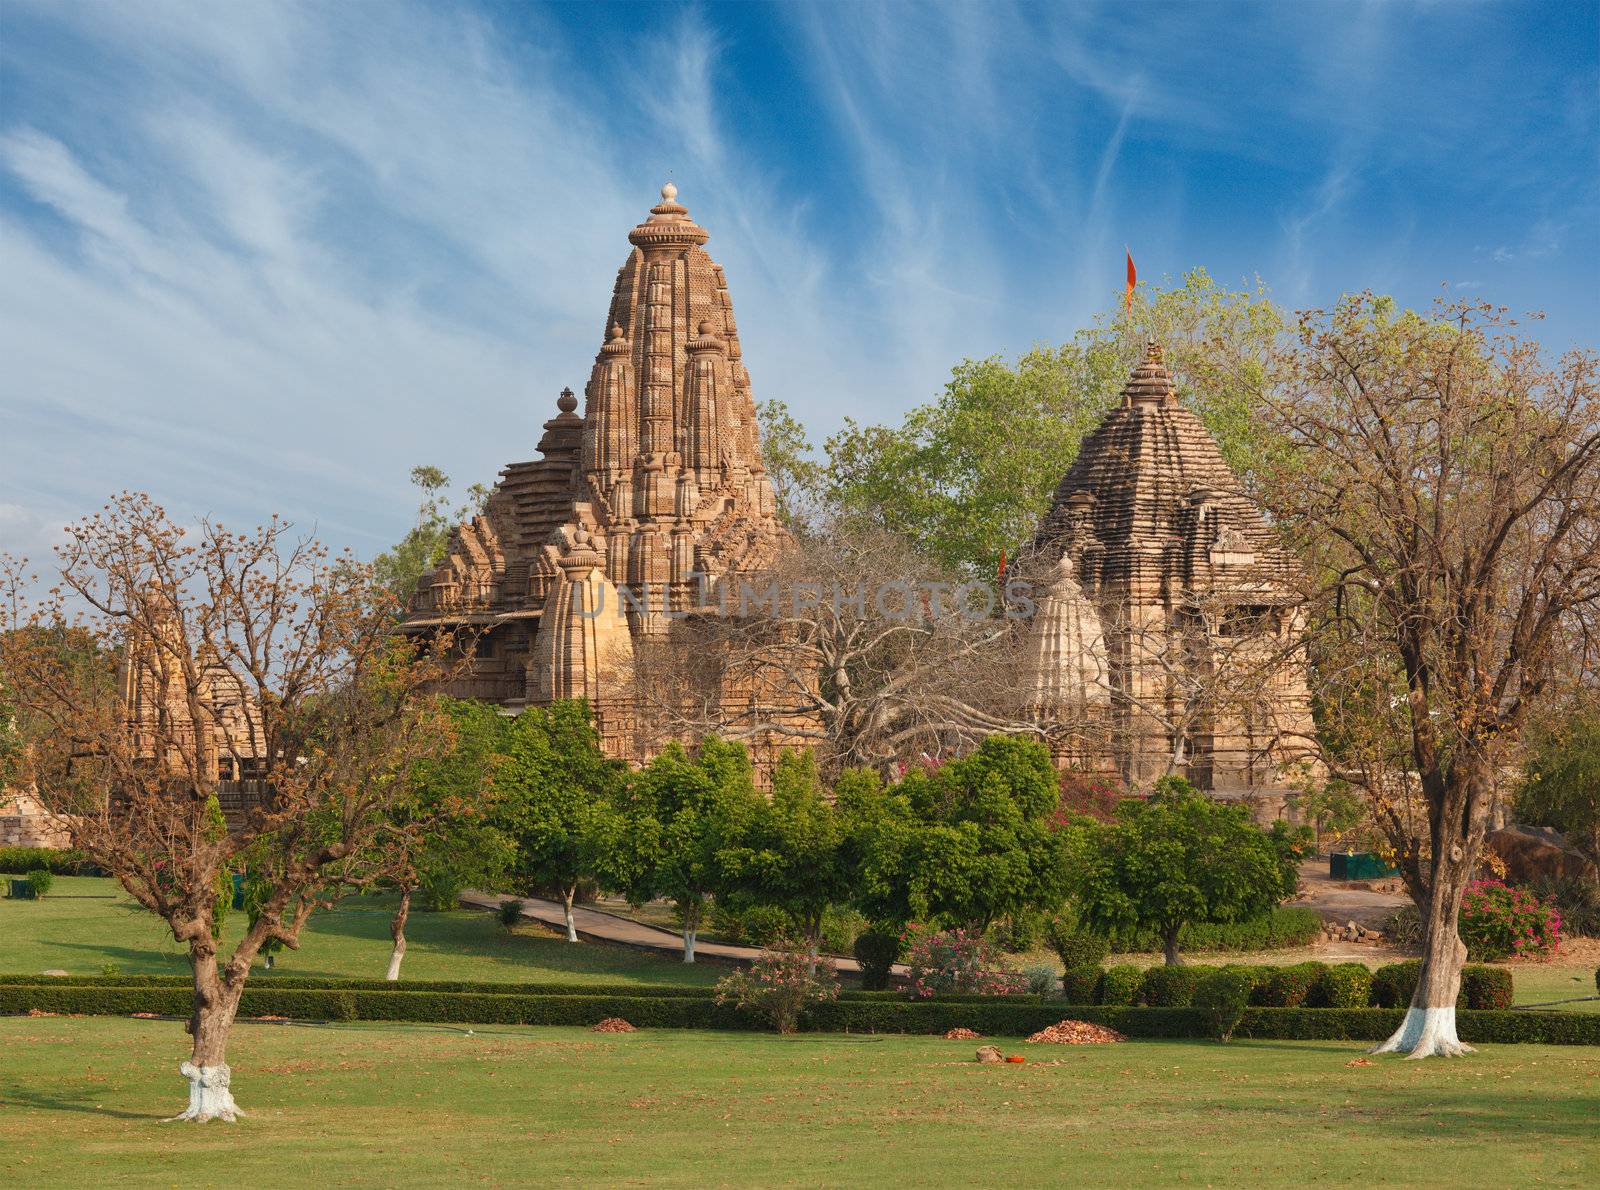 Lakshmana and Matangeshwar temples, Khajuraho by dimol